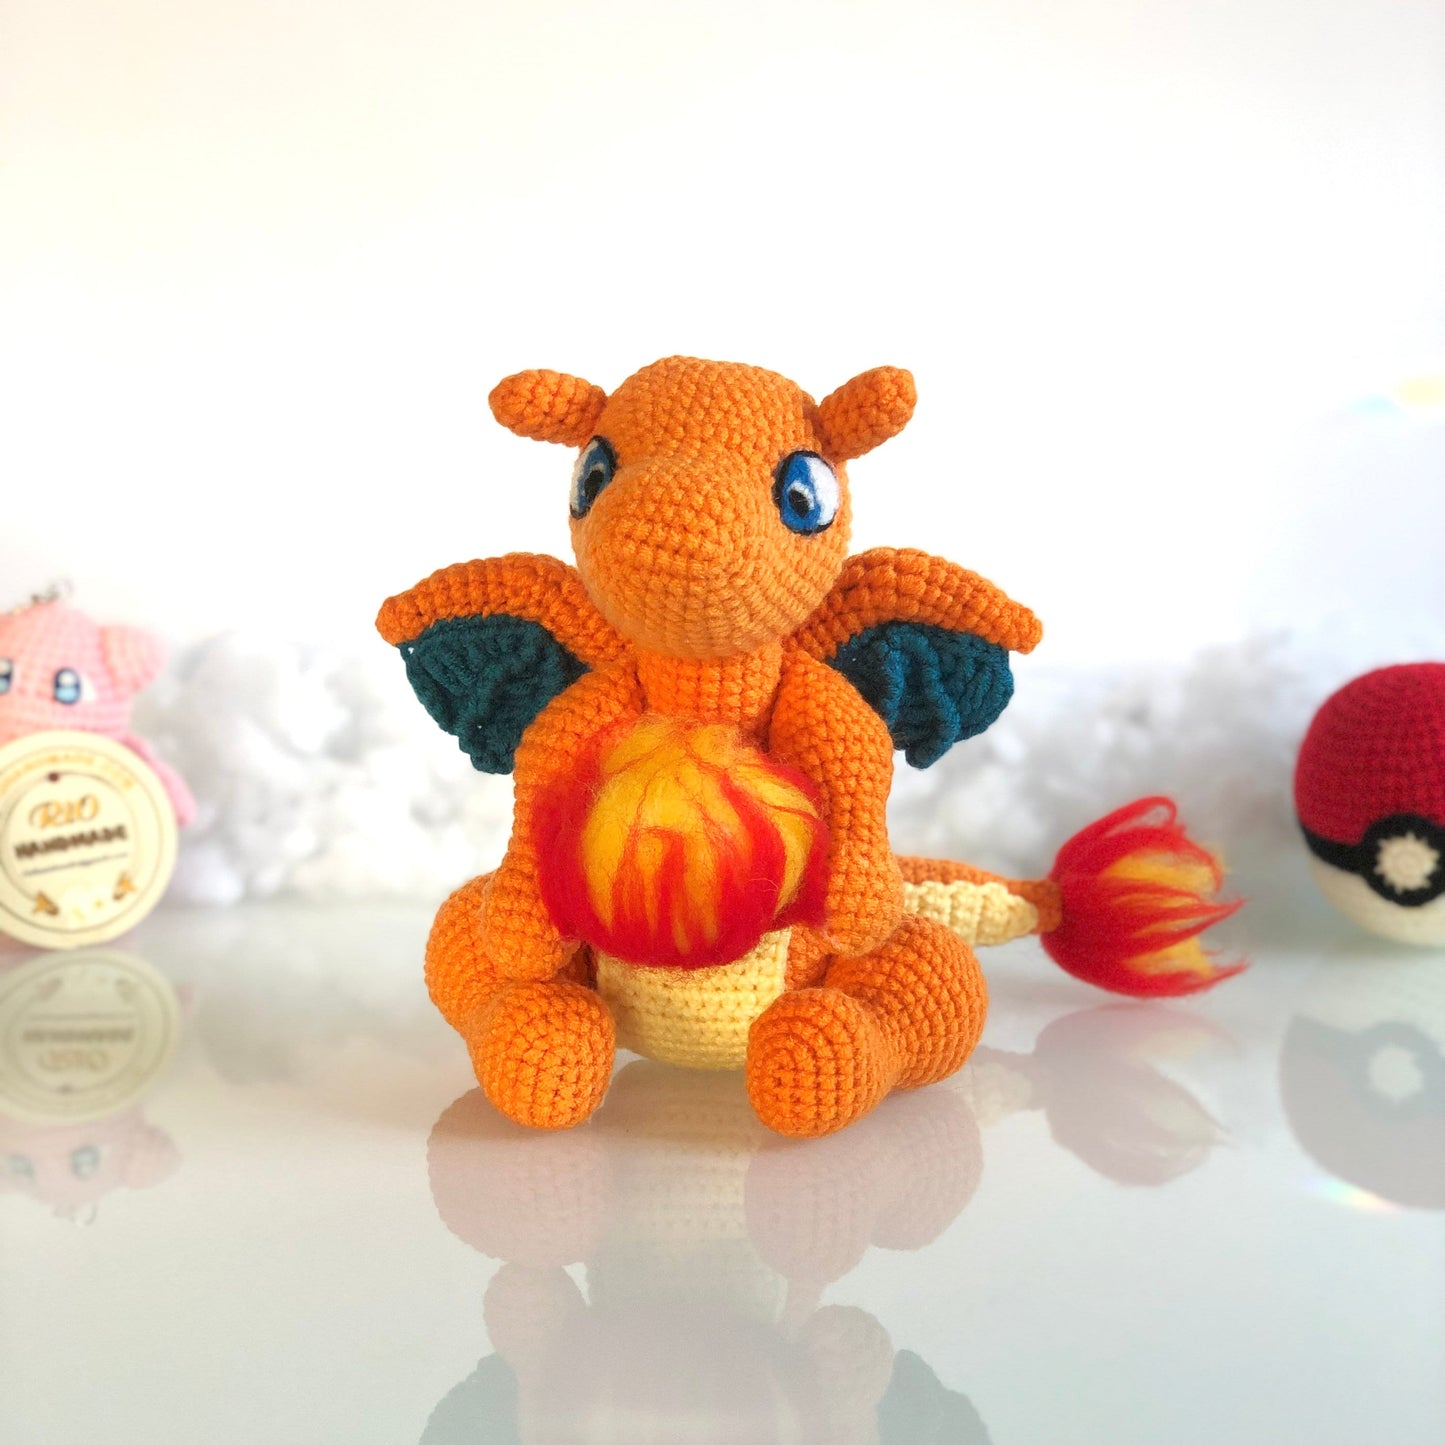 Handmade  Charizard Crochet, Inspired Pokemon, Amigurumi Toy, cute toy for kid, adult hobby